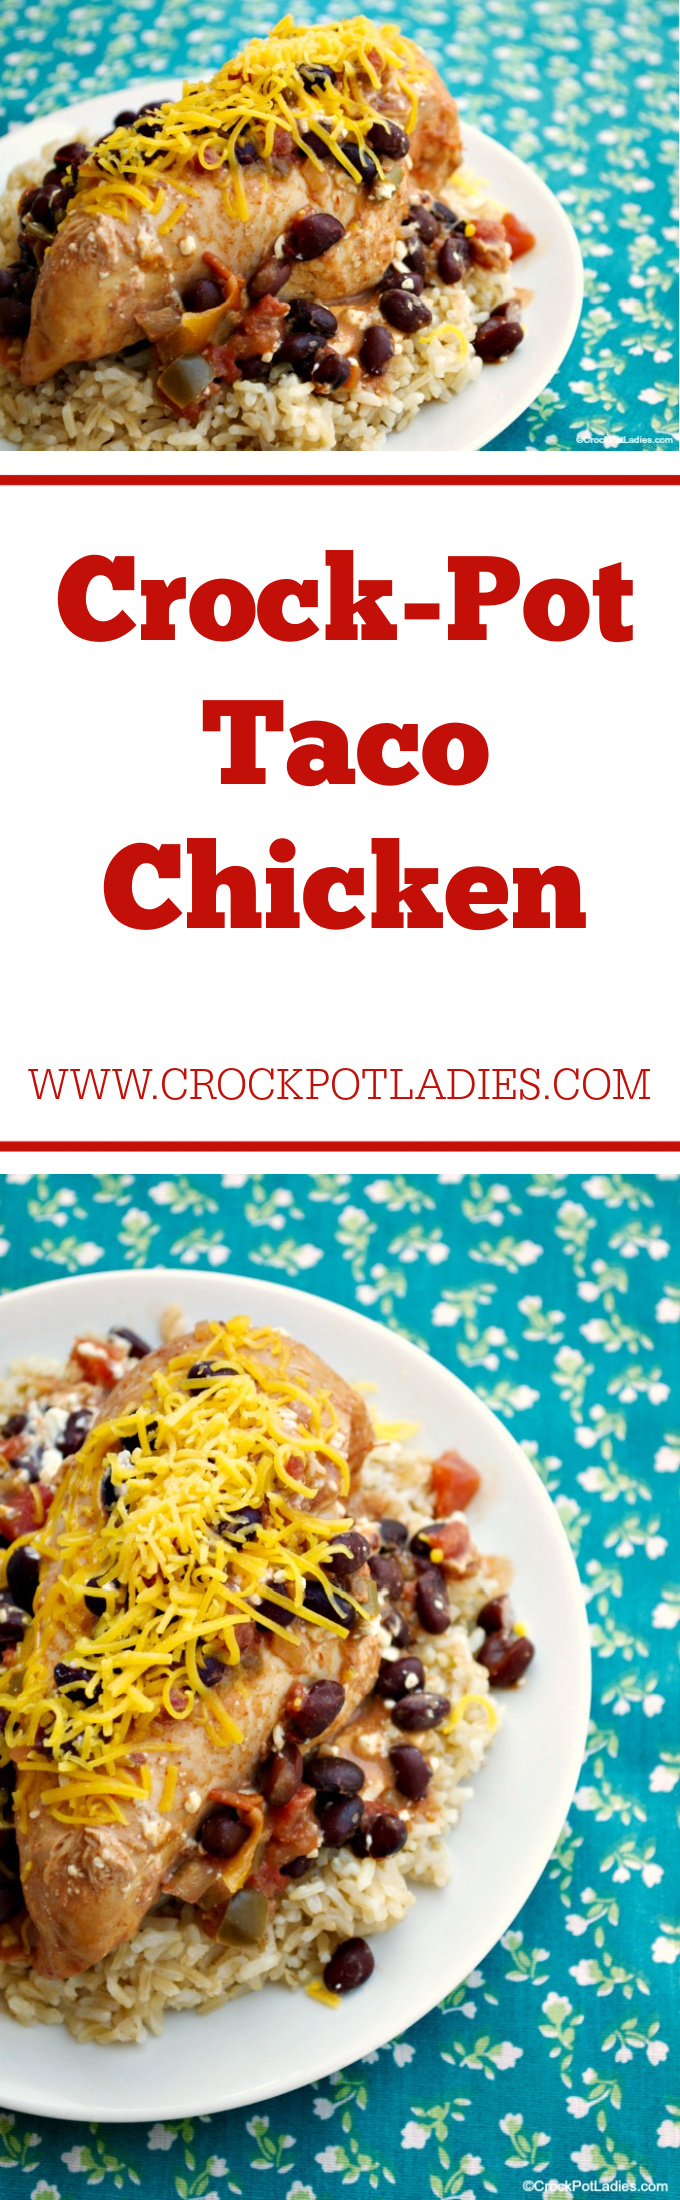 Crock-Pot Taco Chicken